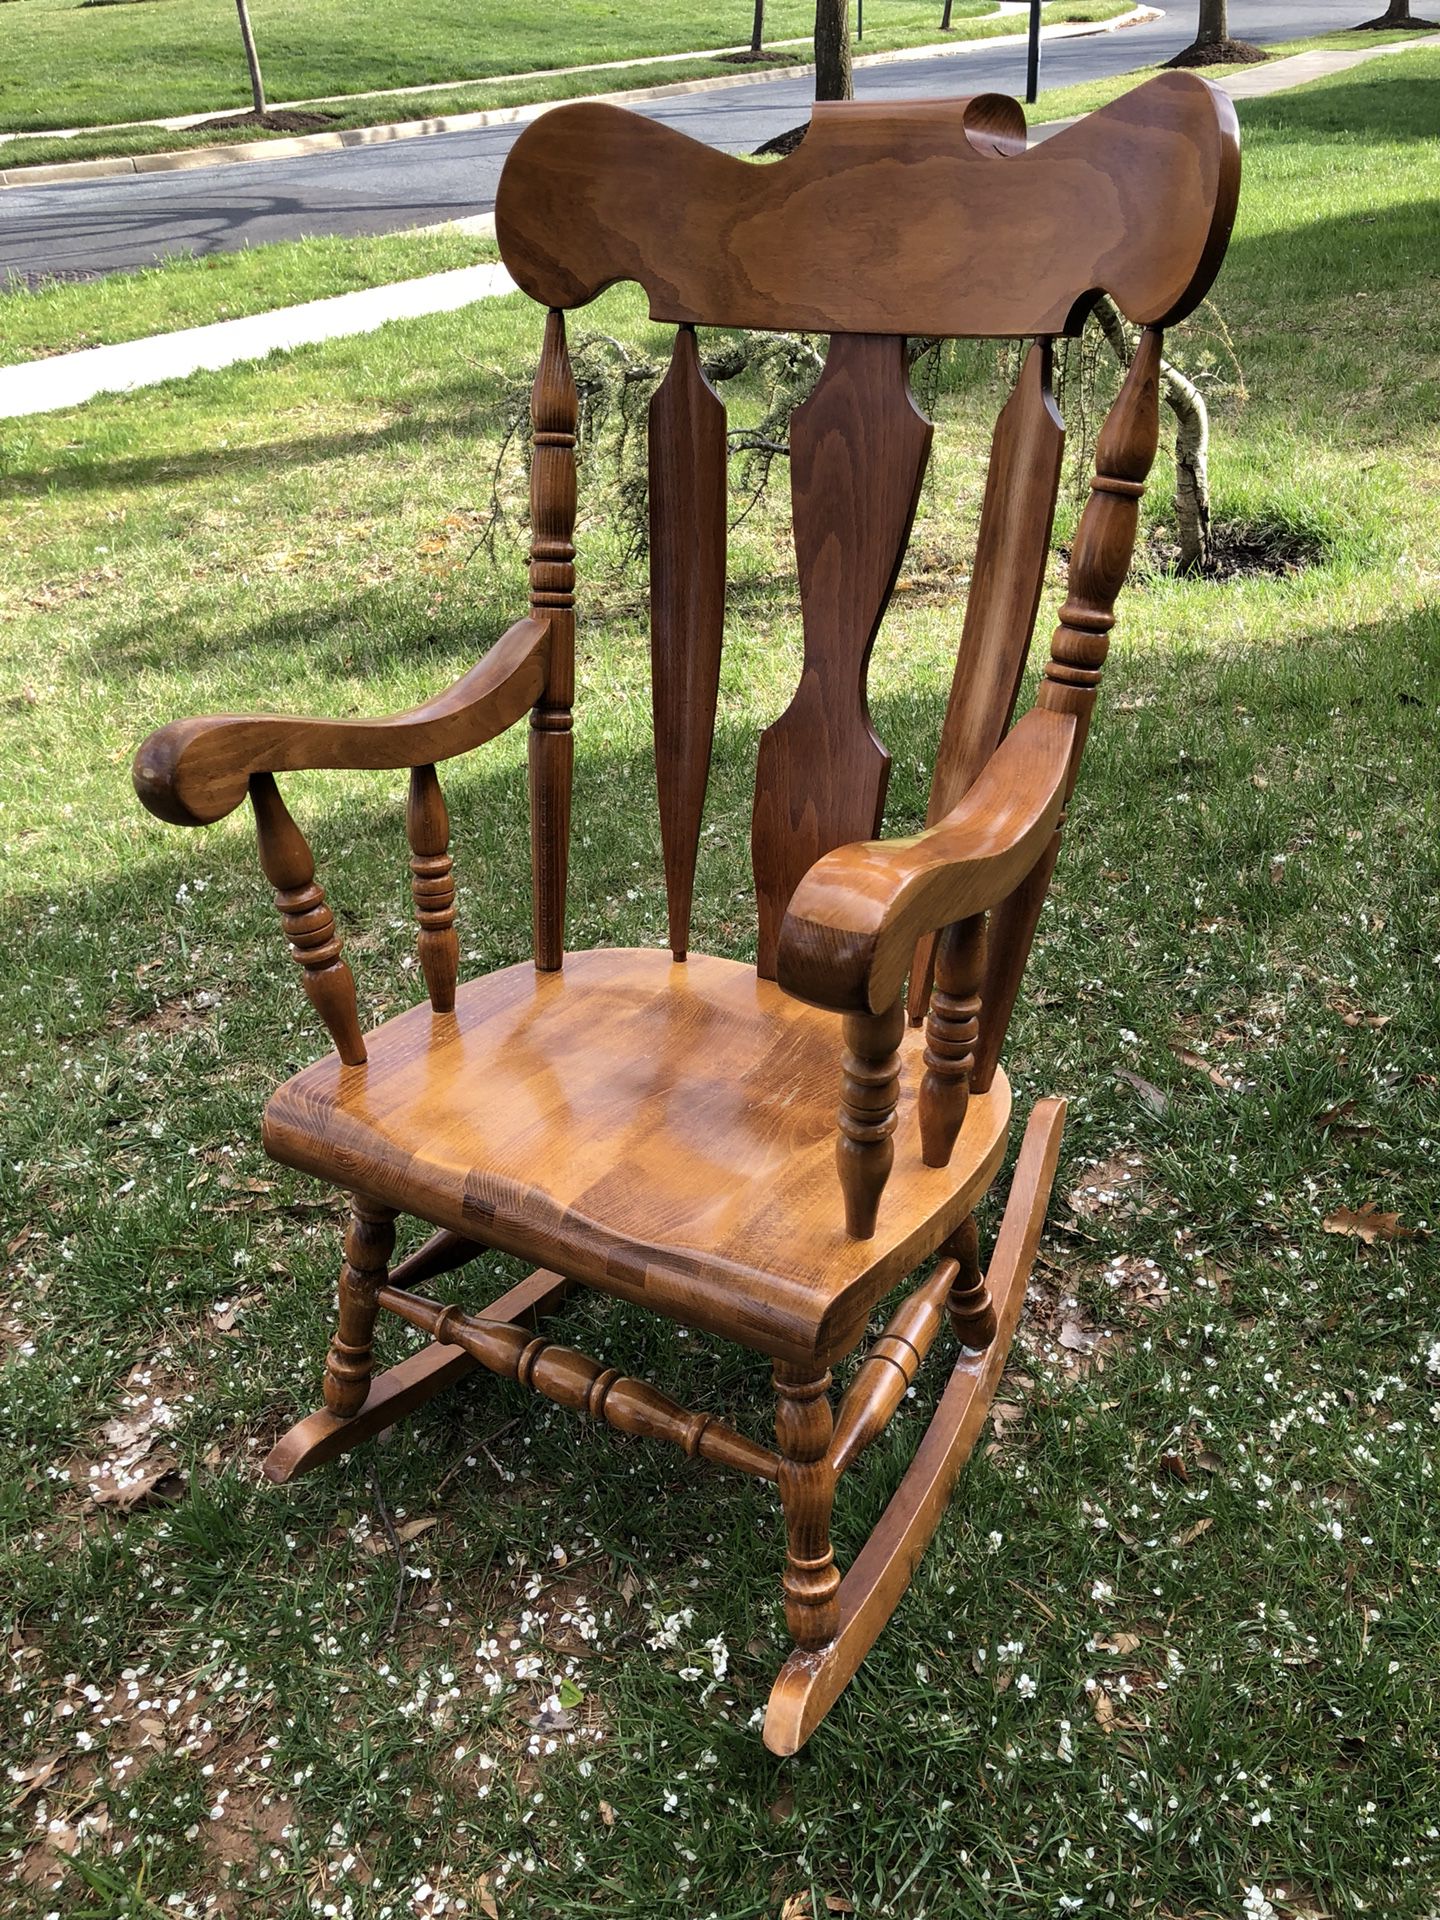 Rocking wooden chair.